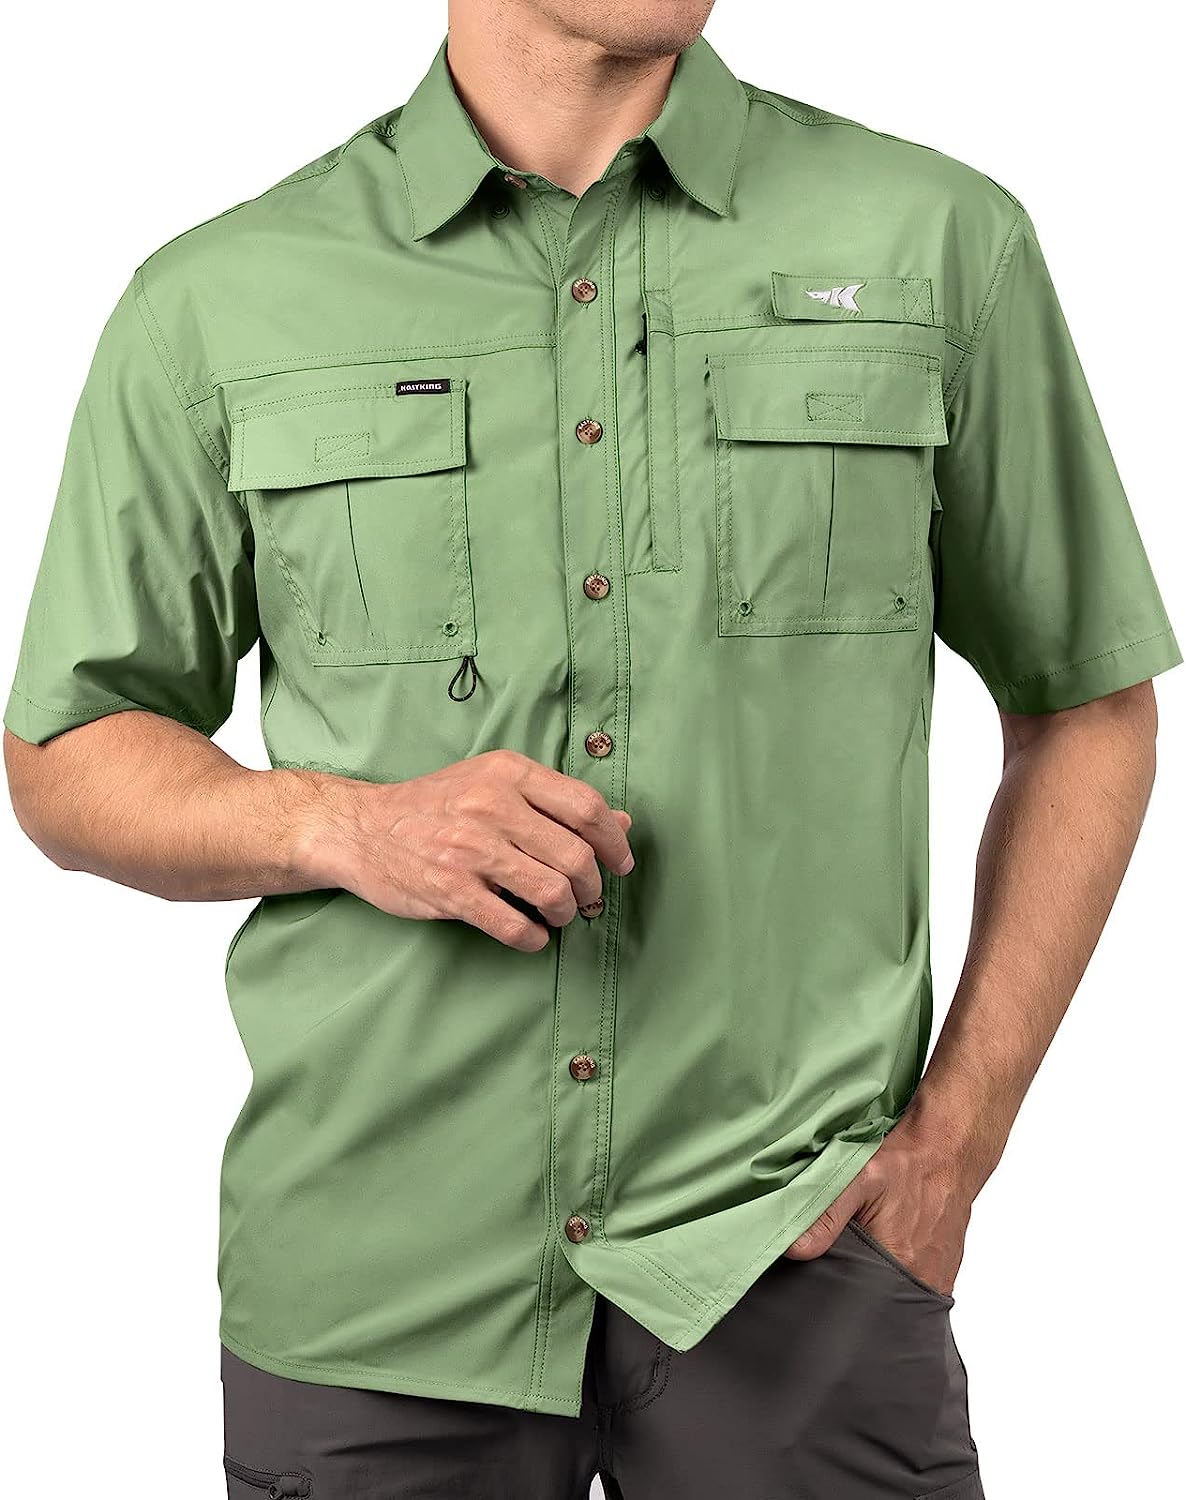 KastKing ReKon Men's Fishing Shirts, Well Made, Quick-Dry Short